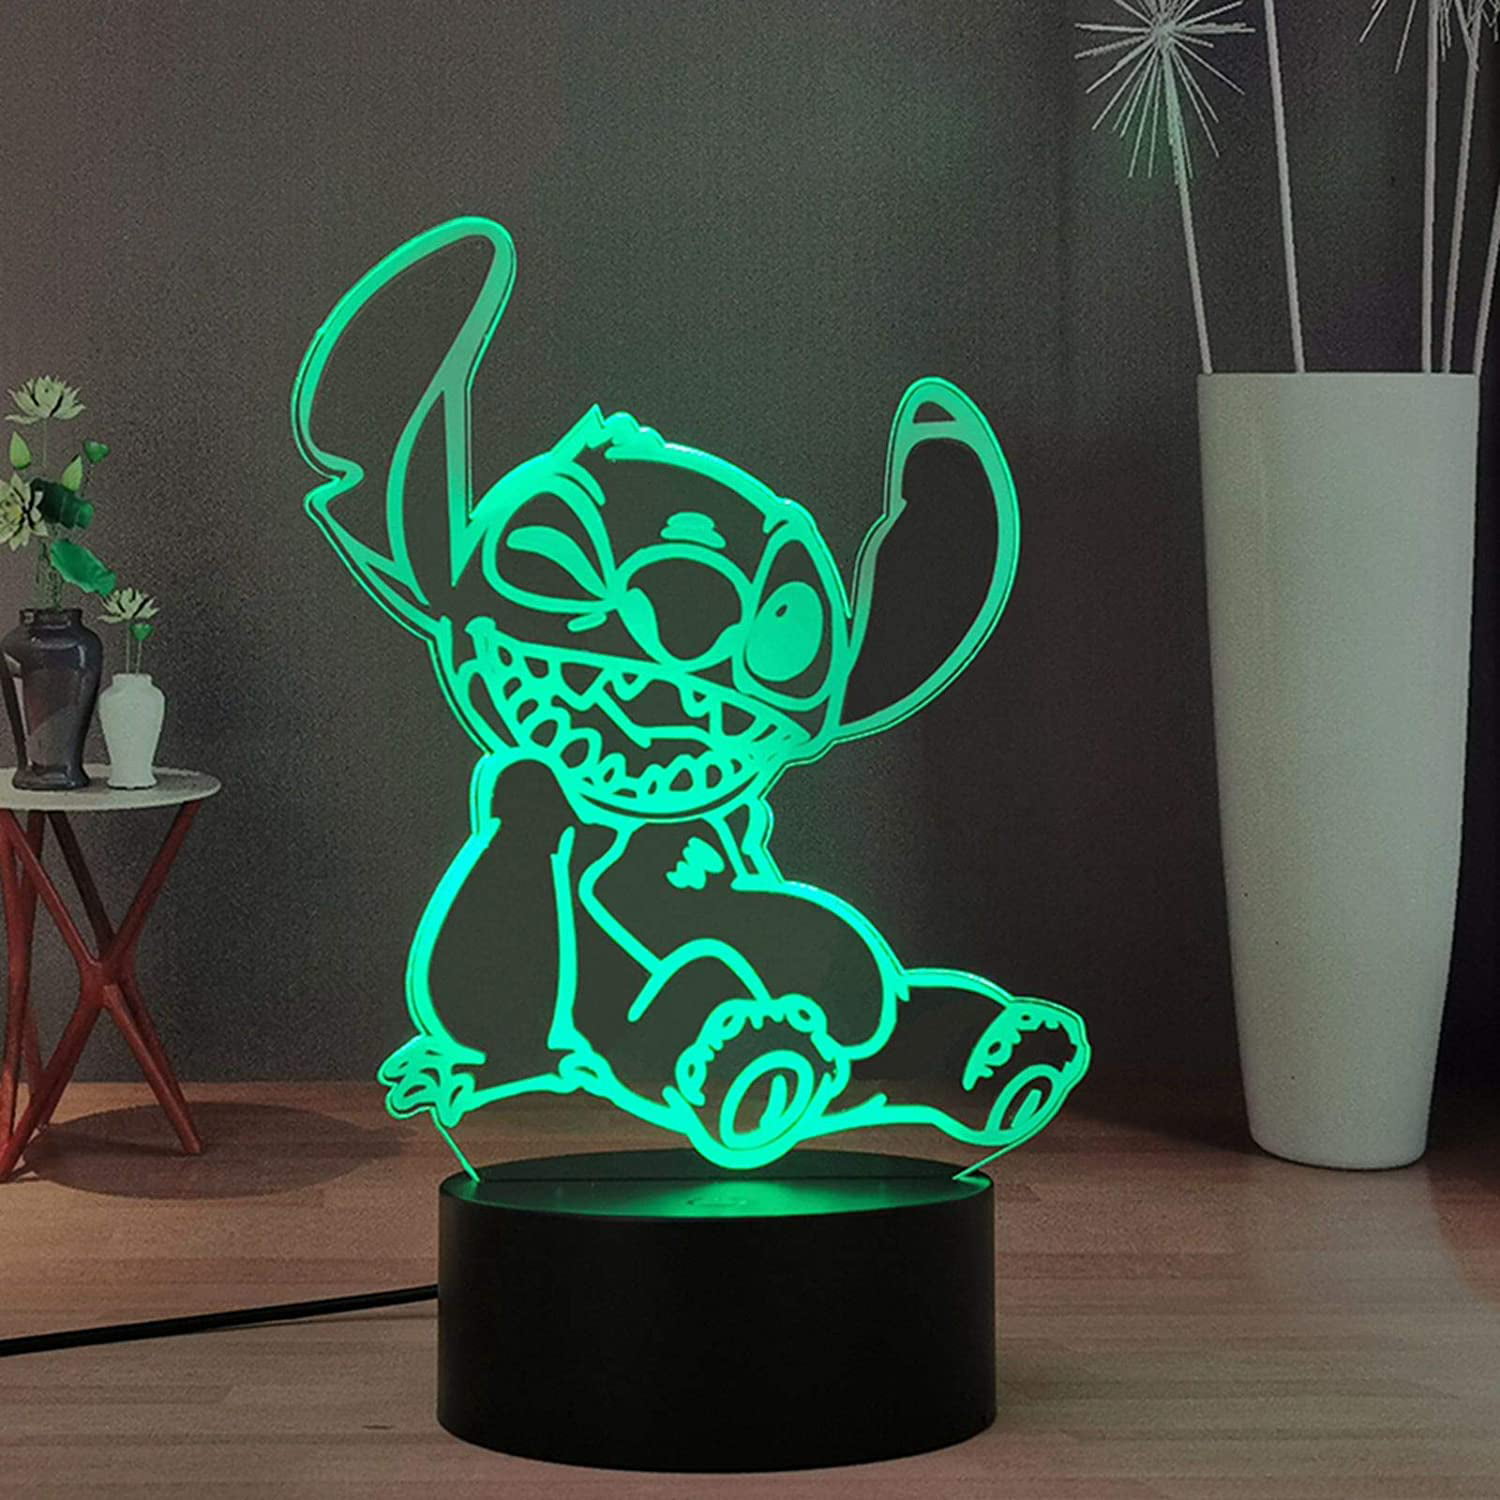 3D LED Stitch Night Light Illusion Acrylic USB Touch Lamp New FAST DISPATCH 